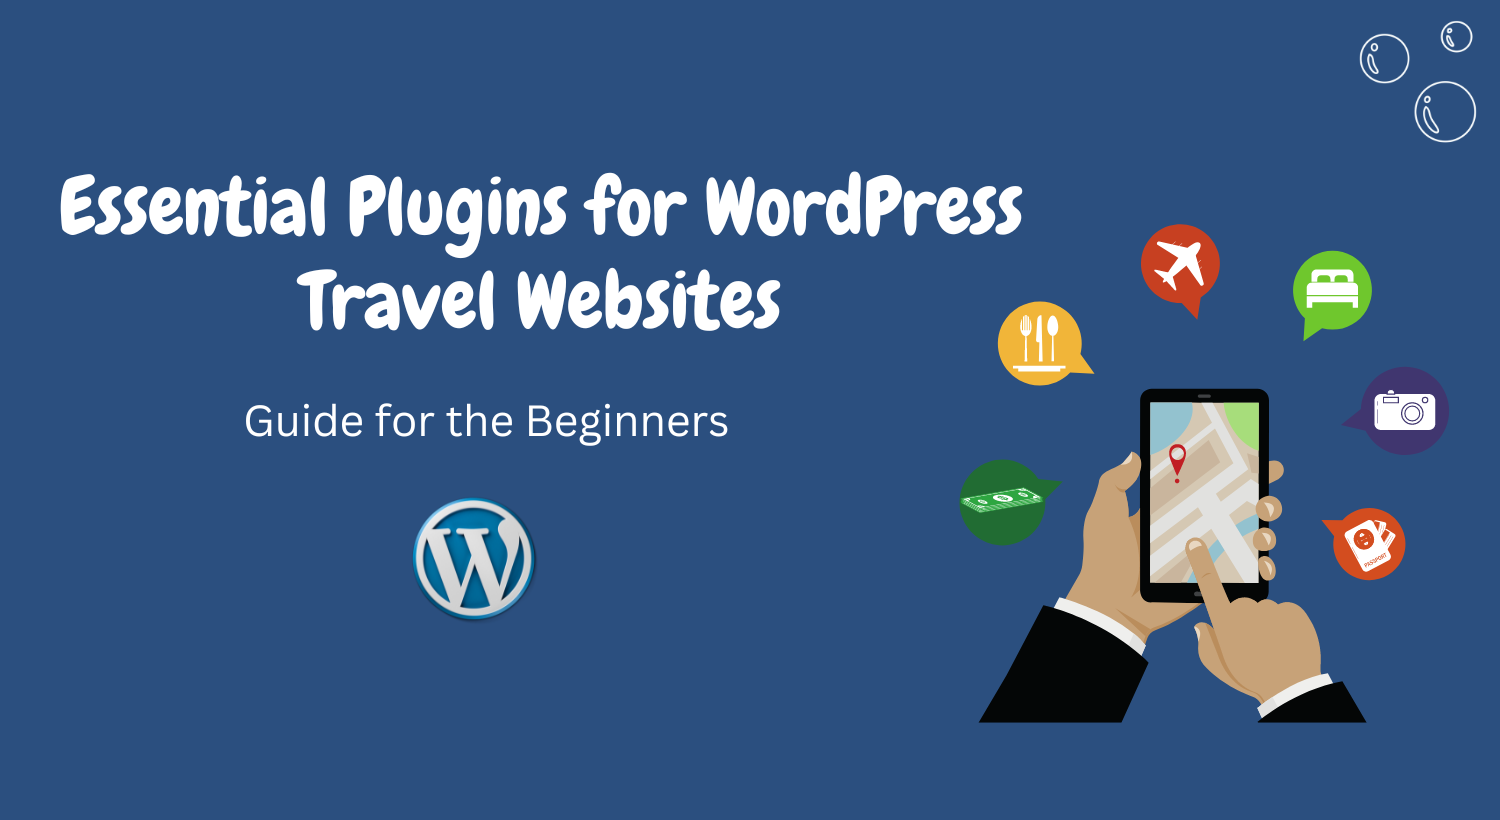 WordPress Travel Websites